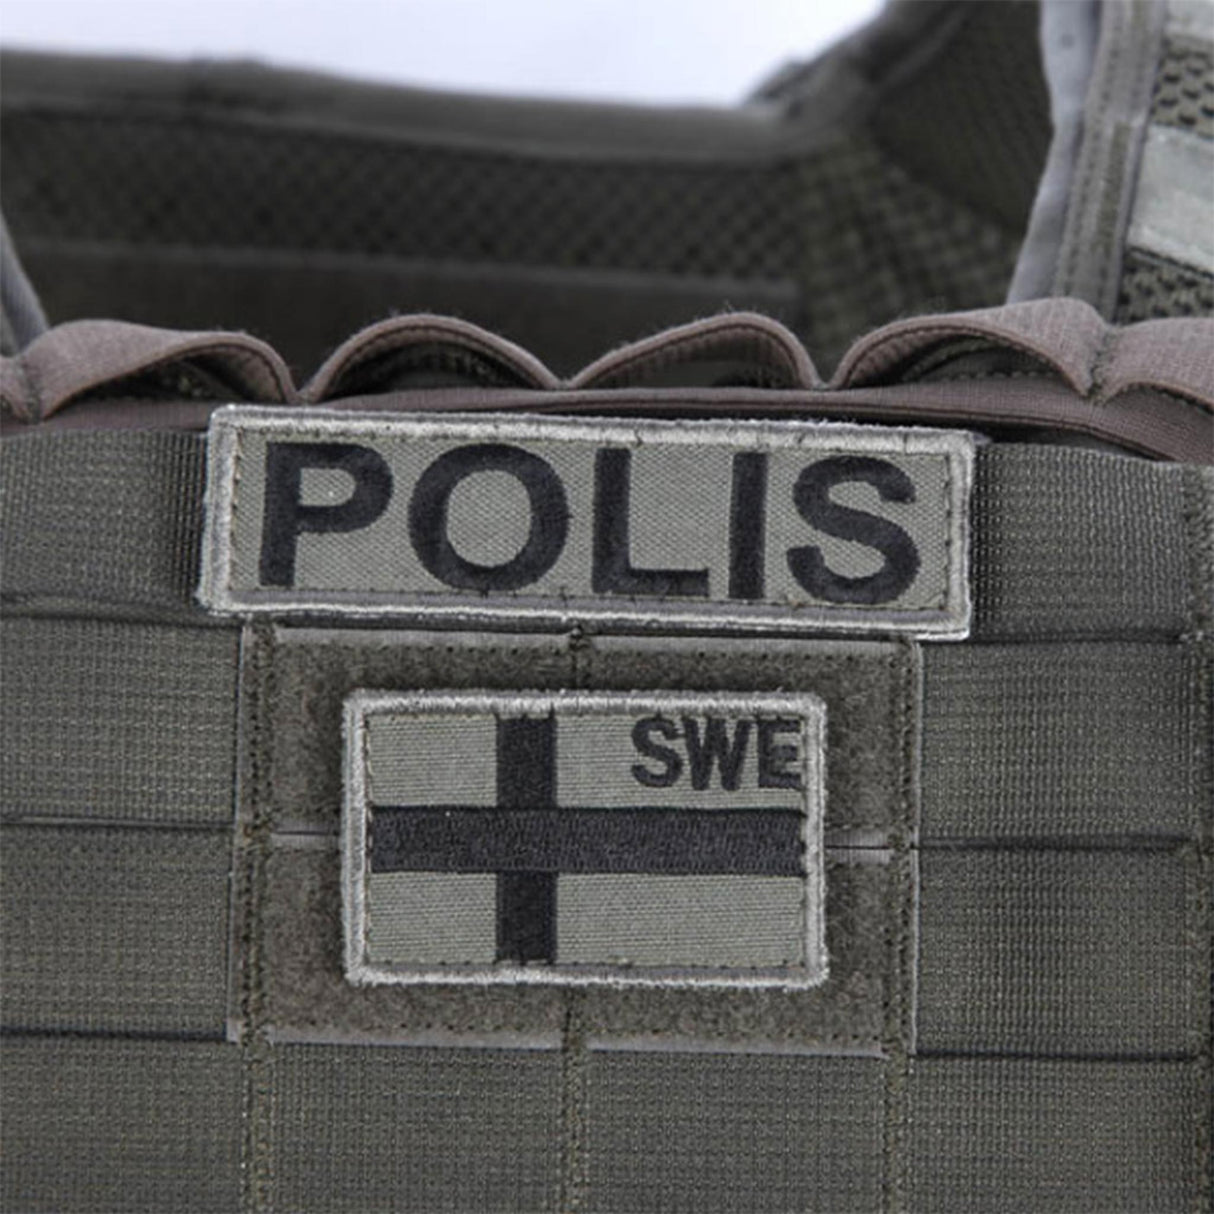 SNIGEL Litet Polismärke -12 - Polisprylar.se